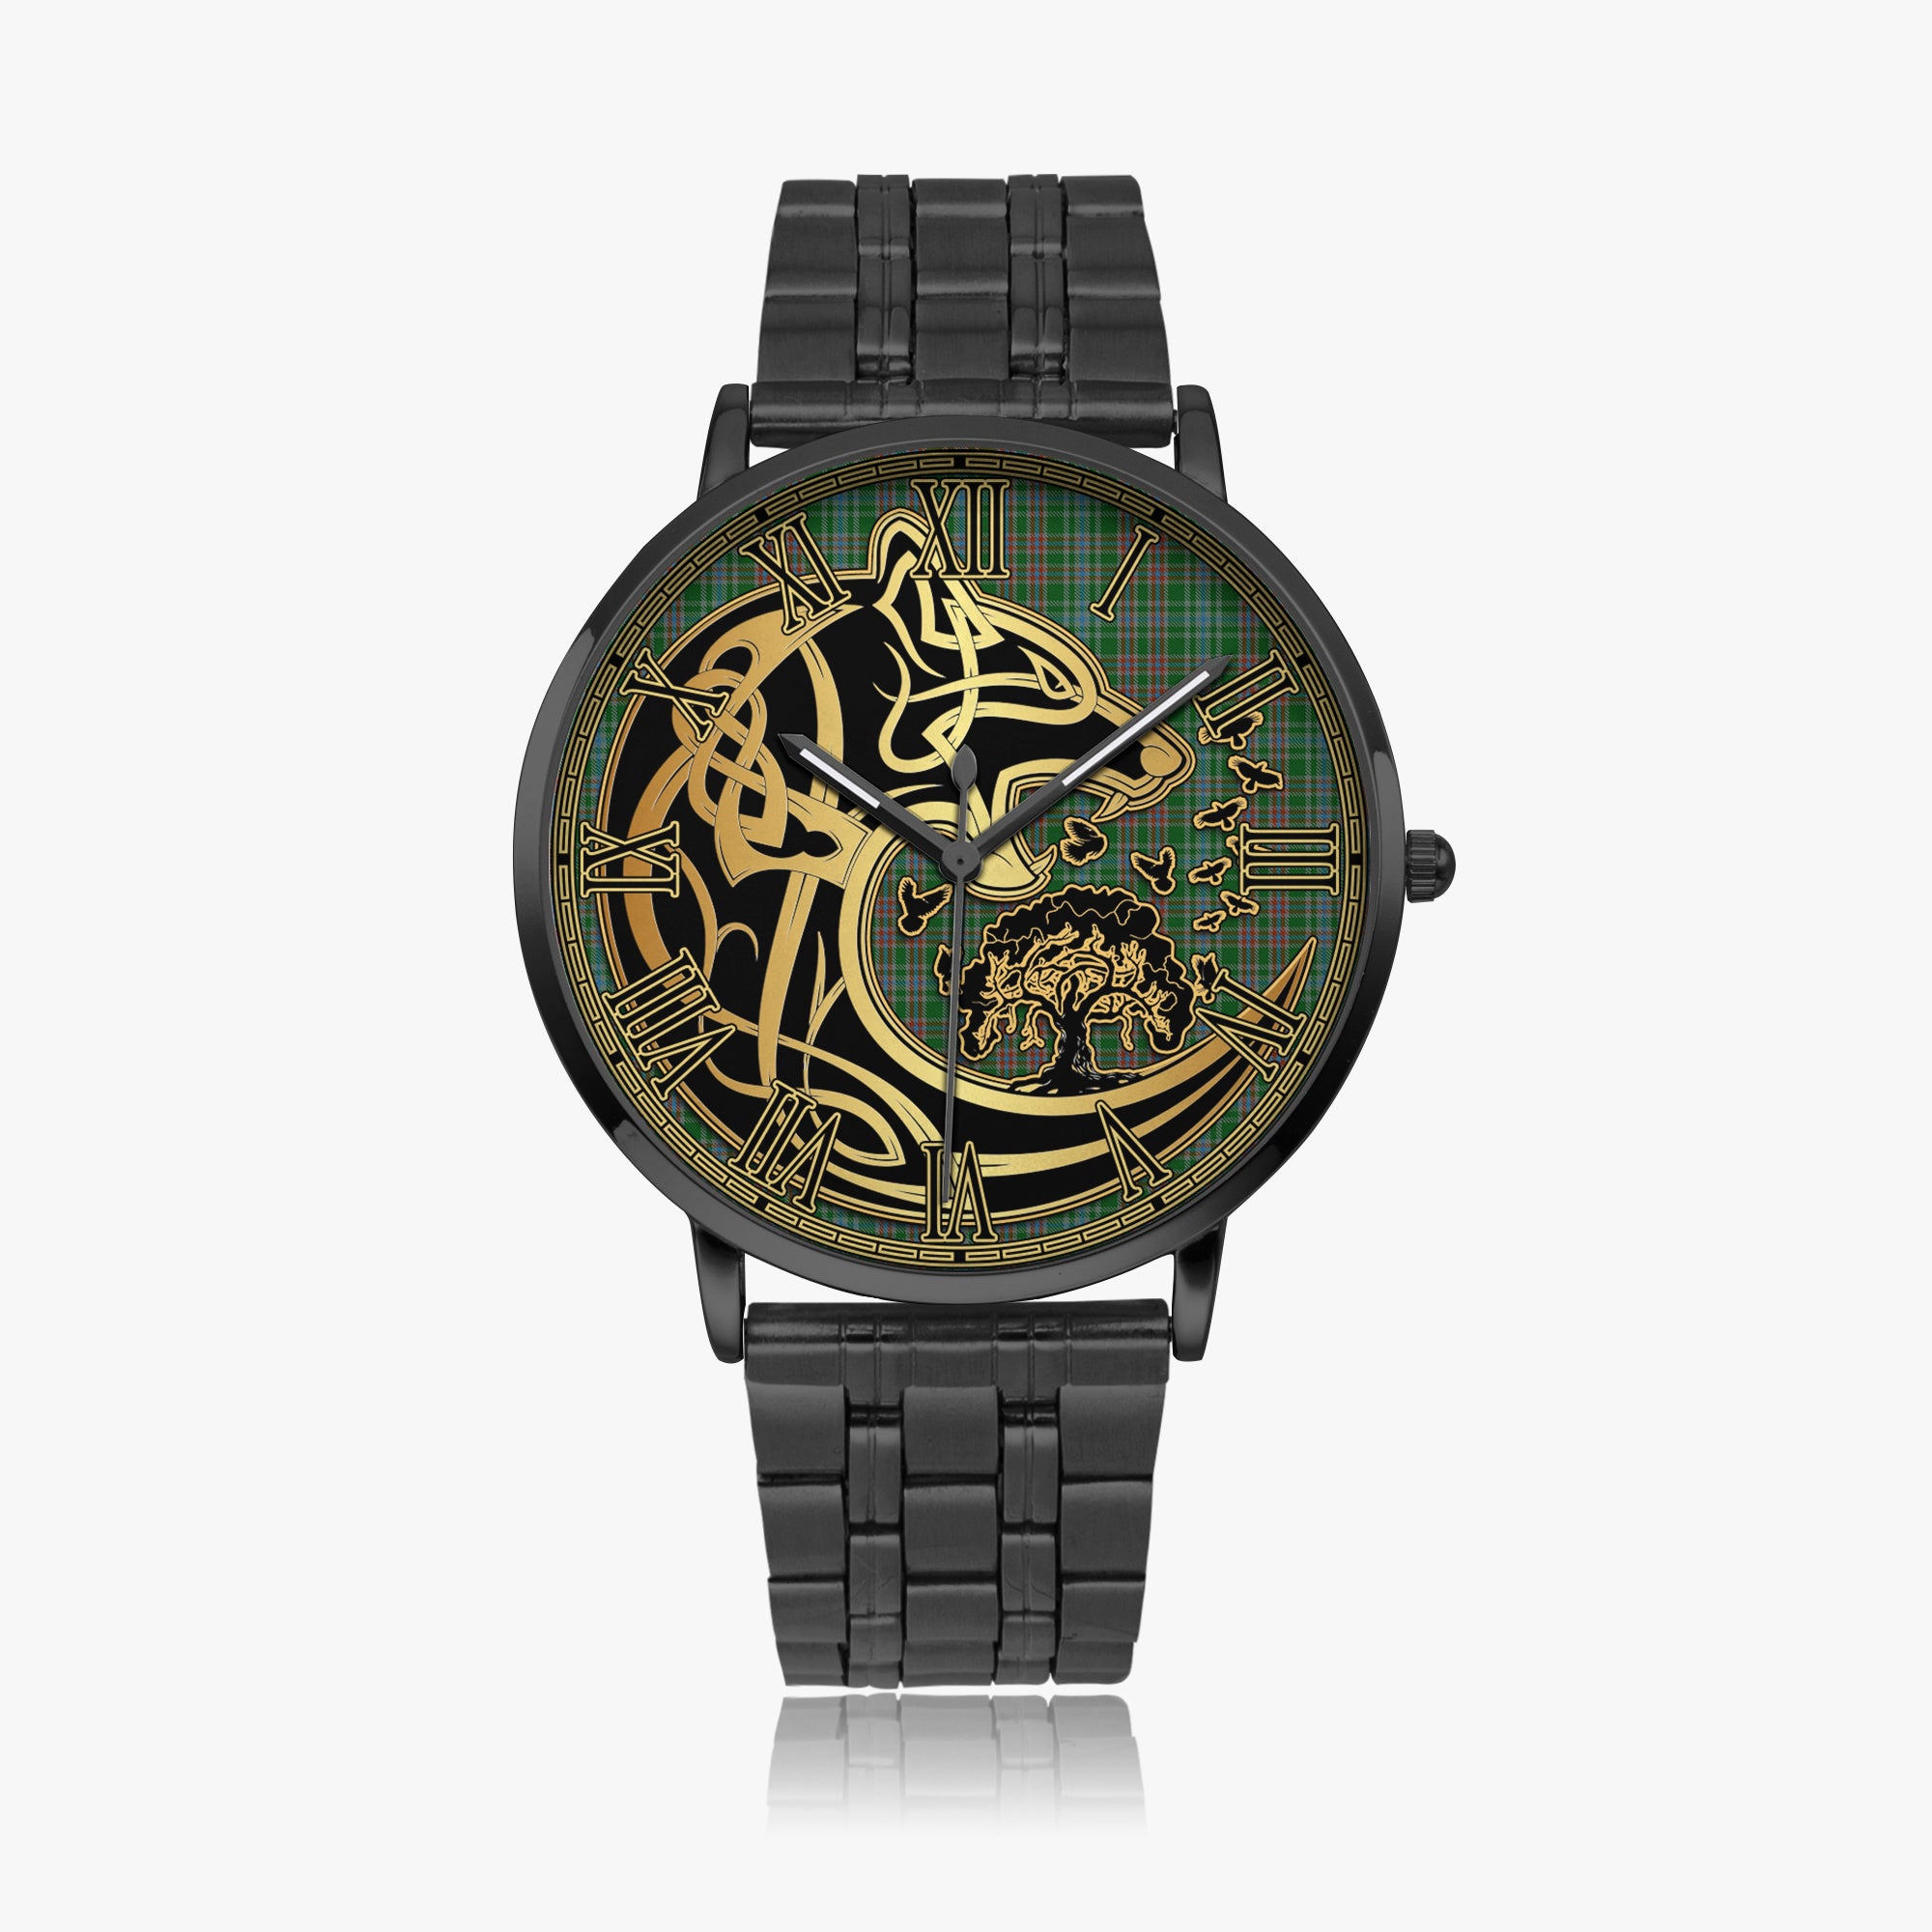 ralston-usa-tartan-watch-with-stainless-steel-trap-tartan-instafamous-quartz-stainless-steel-watch-golden-celtic-wolf-style